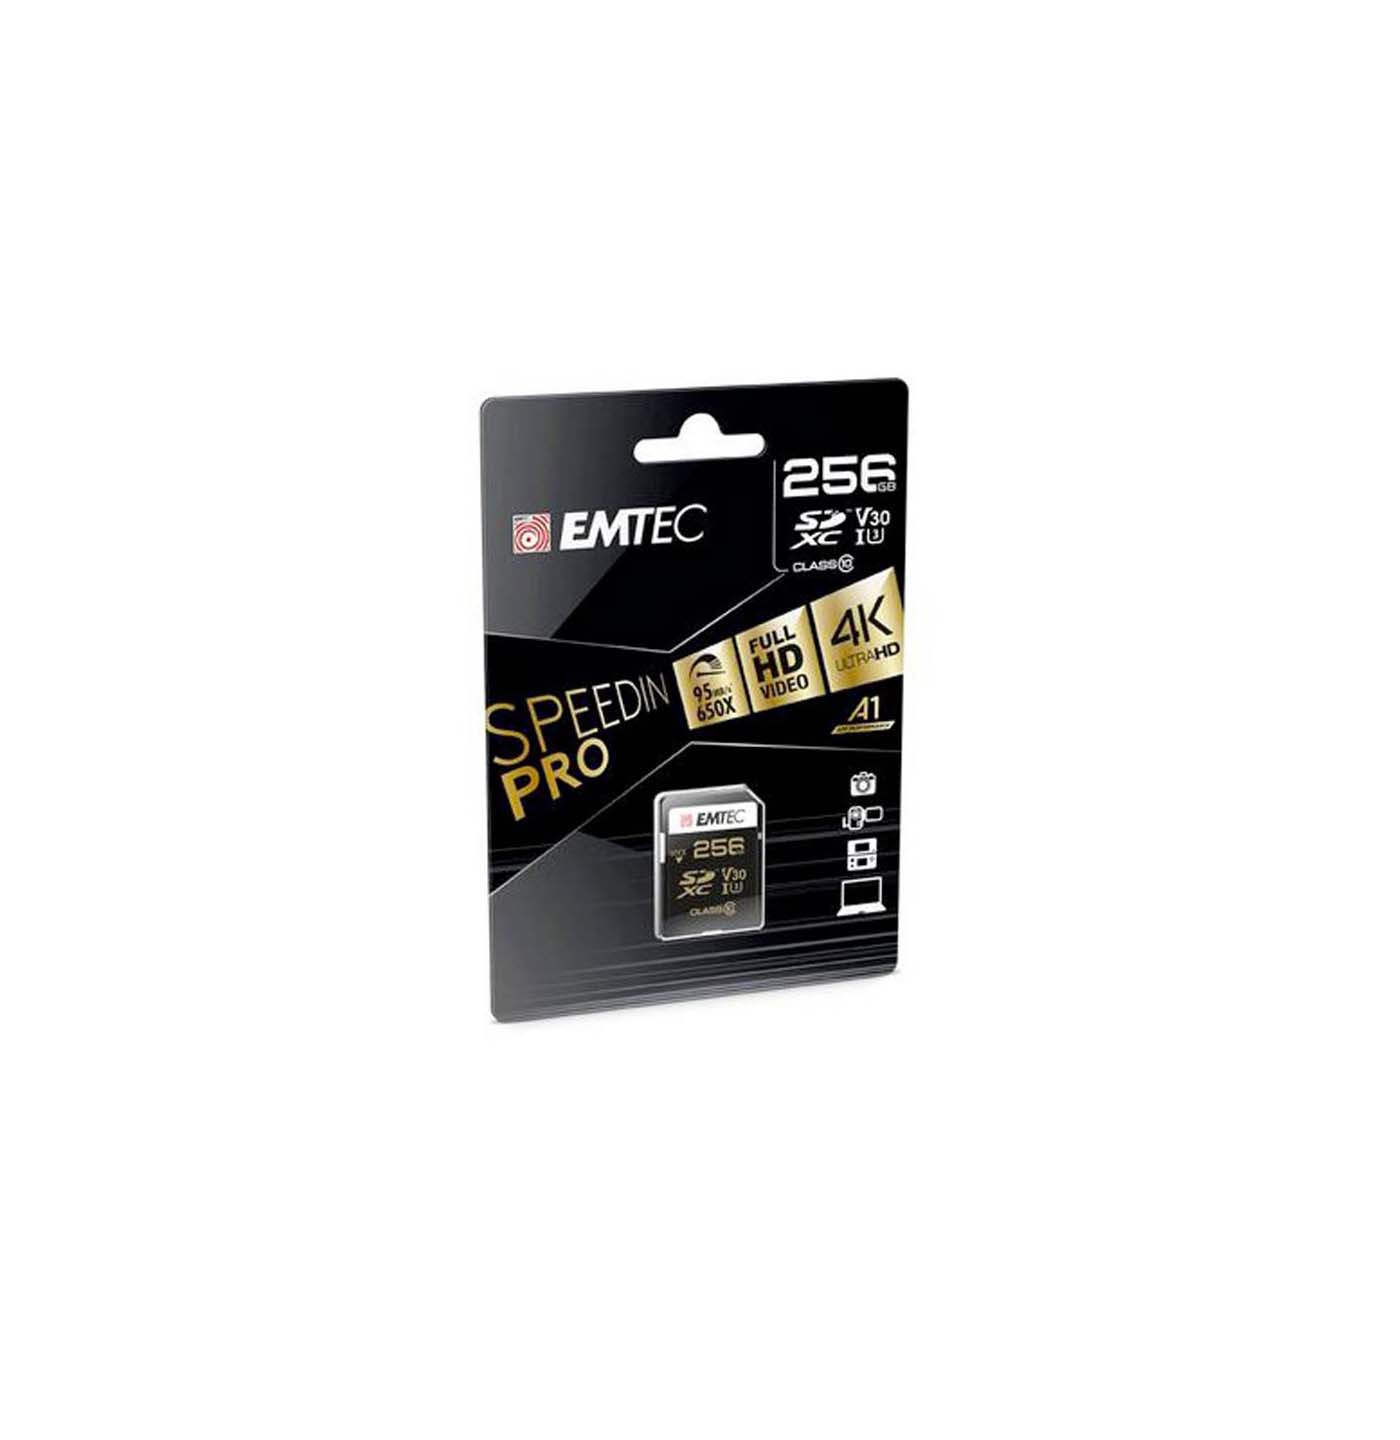 EMTEC MICRO SD 256GB SPEEDIN